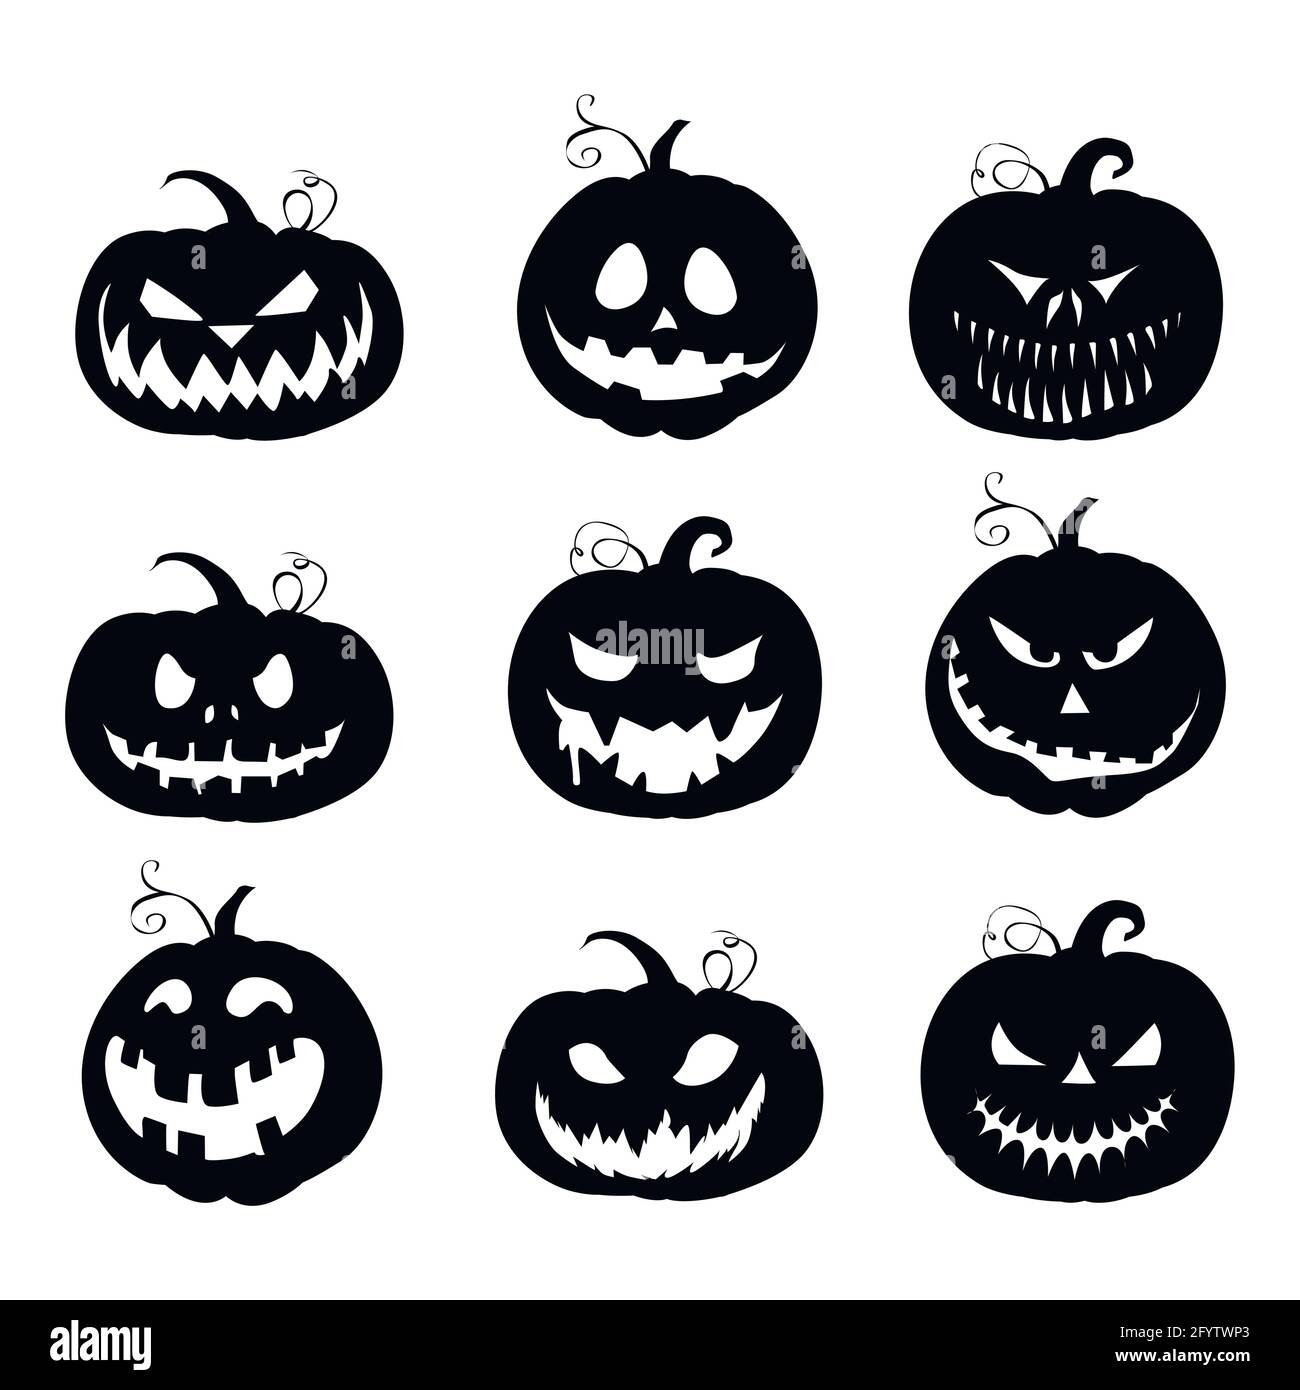 Colección de siluetas de calabazas negras de Halloween. Vector otoño horror vacaciones, celebración gato divertido, emoción cara tallado ilustración Ilustración del Vector